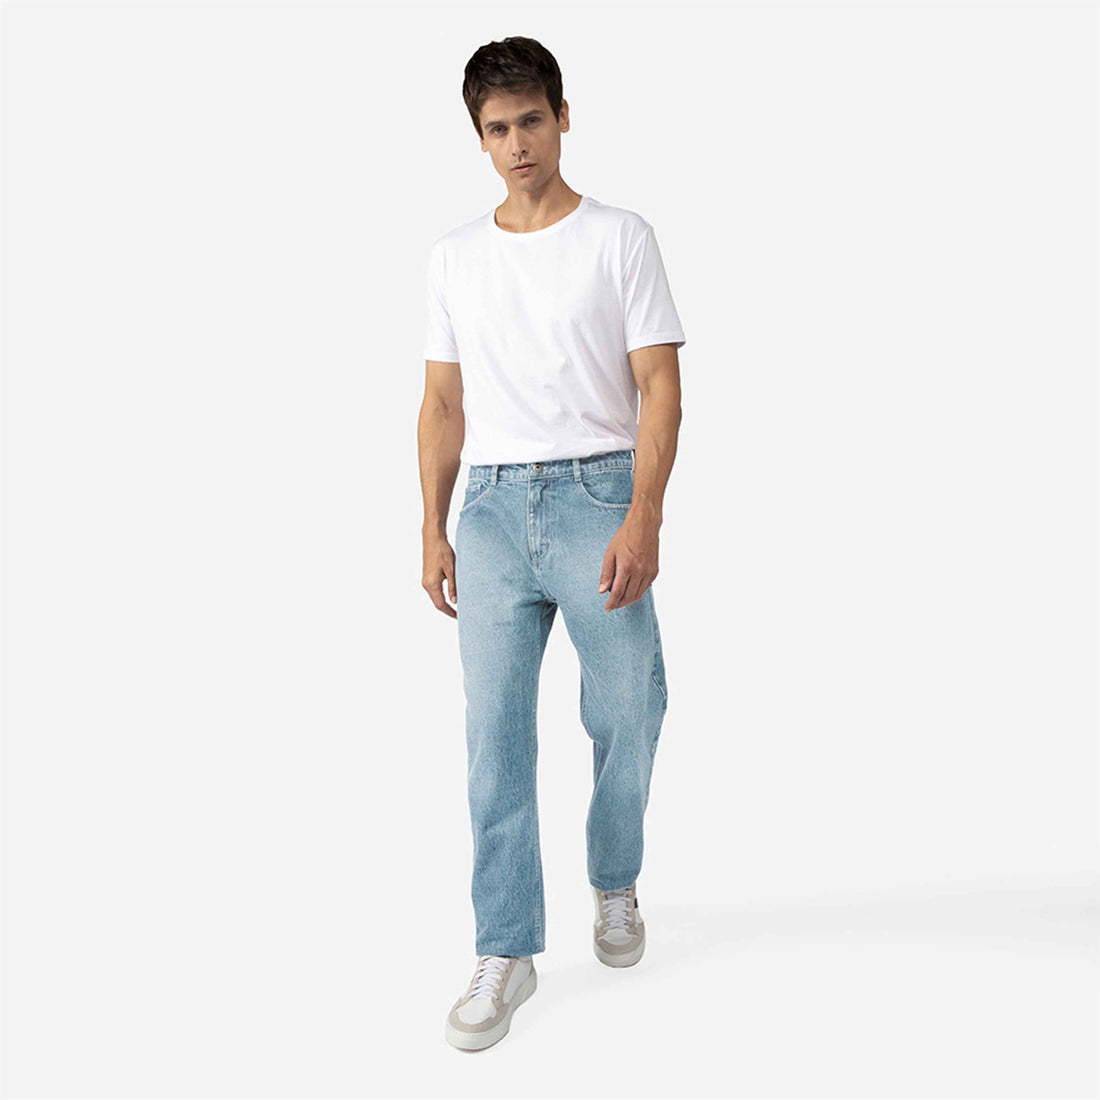 Calça Jeans Clássica Masculina - Azul Jeans Claro